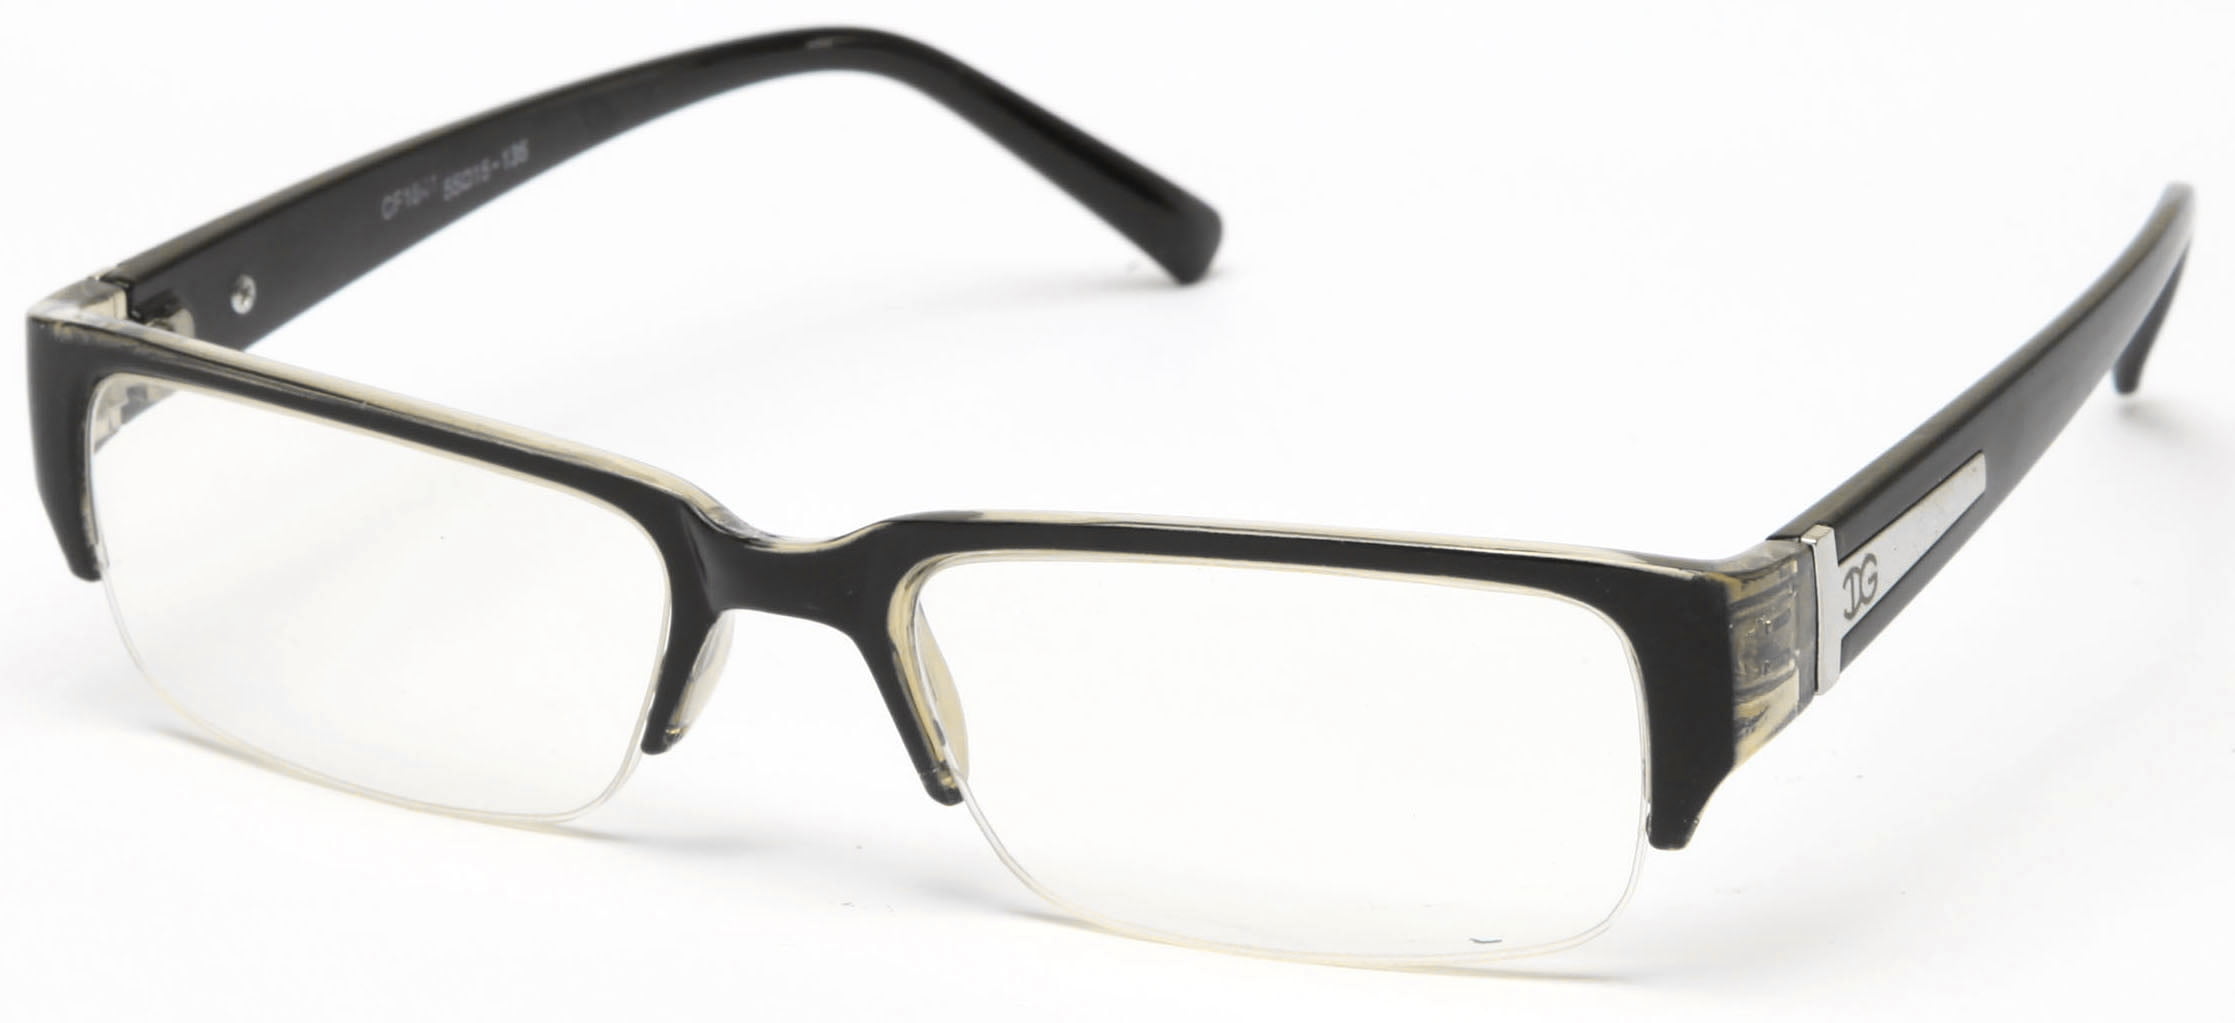 Newbee Fashion Aliz Unisex Clear Lens Sleek Half Frame Slim Temple Fashion Glasses